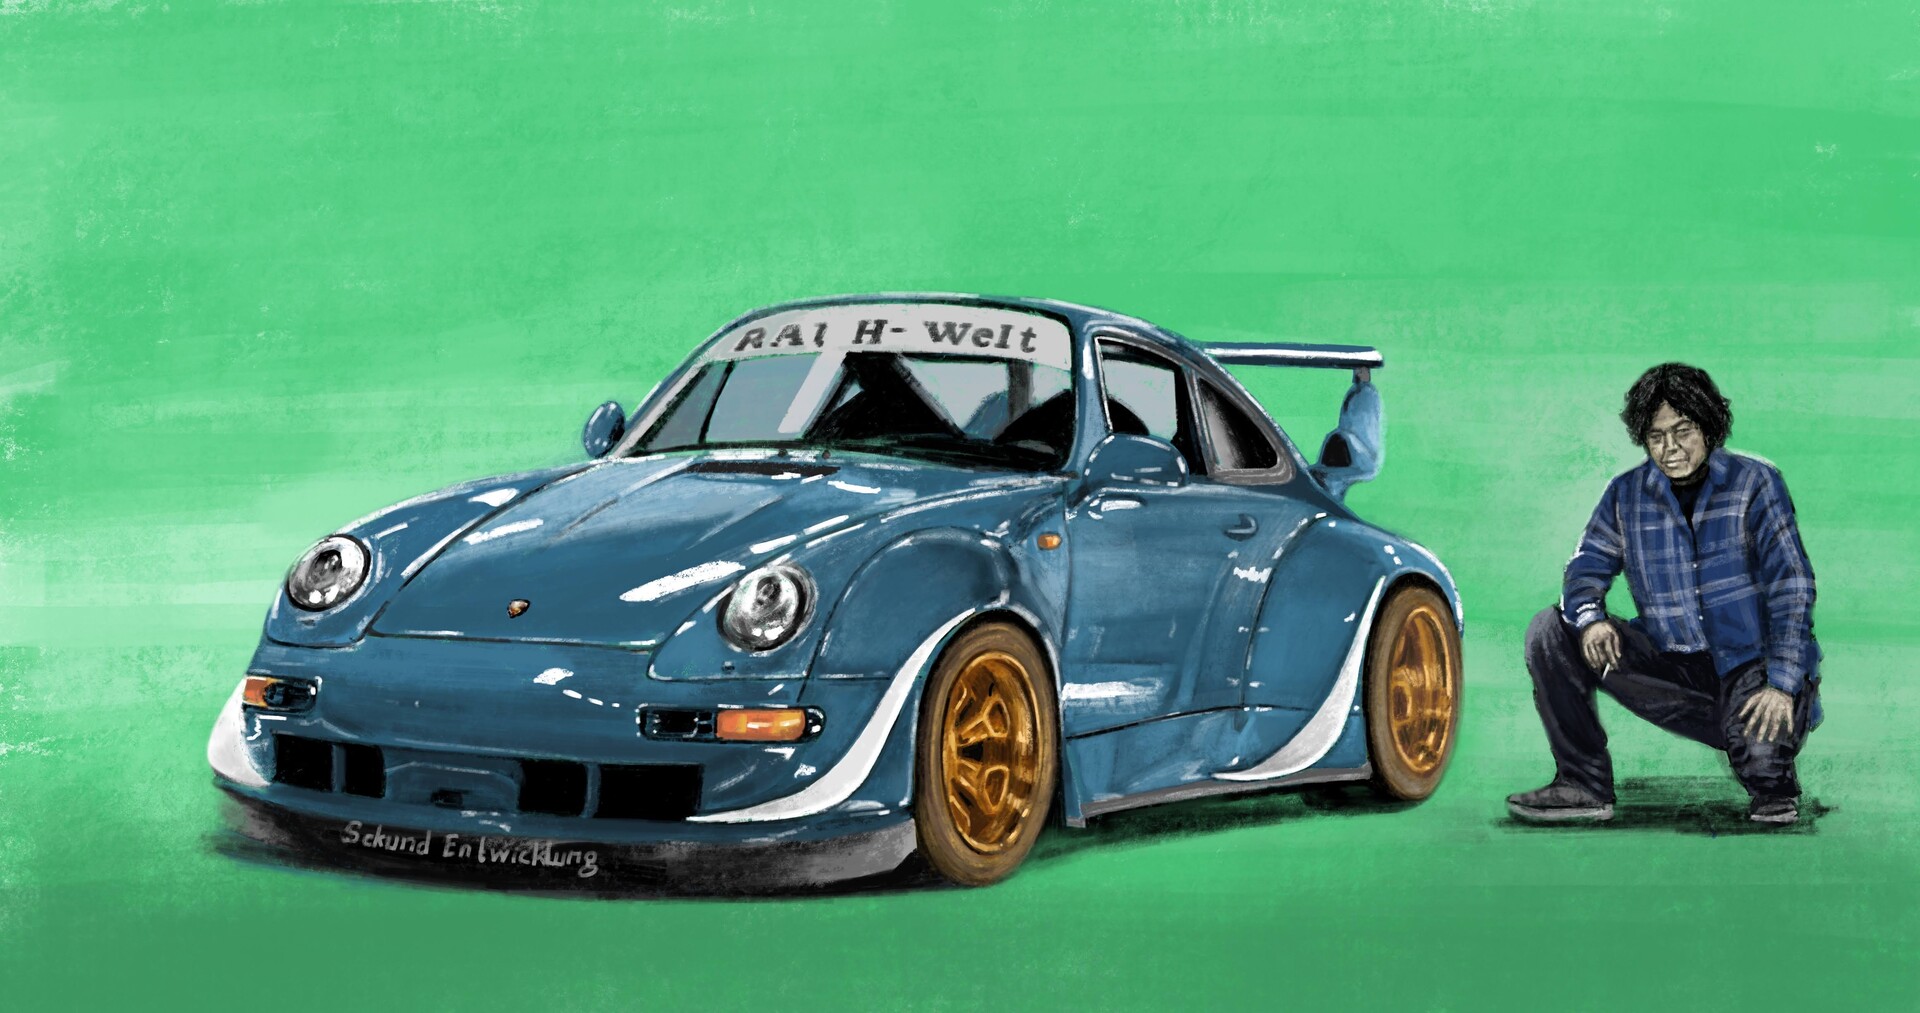 Cars RAUHWelt Begriff Porsche 911 by Akira Nakai seen in Japan [OC